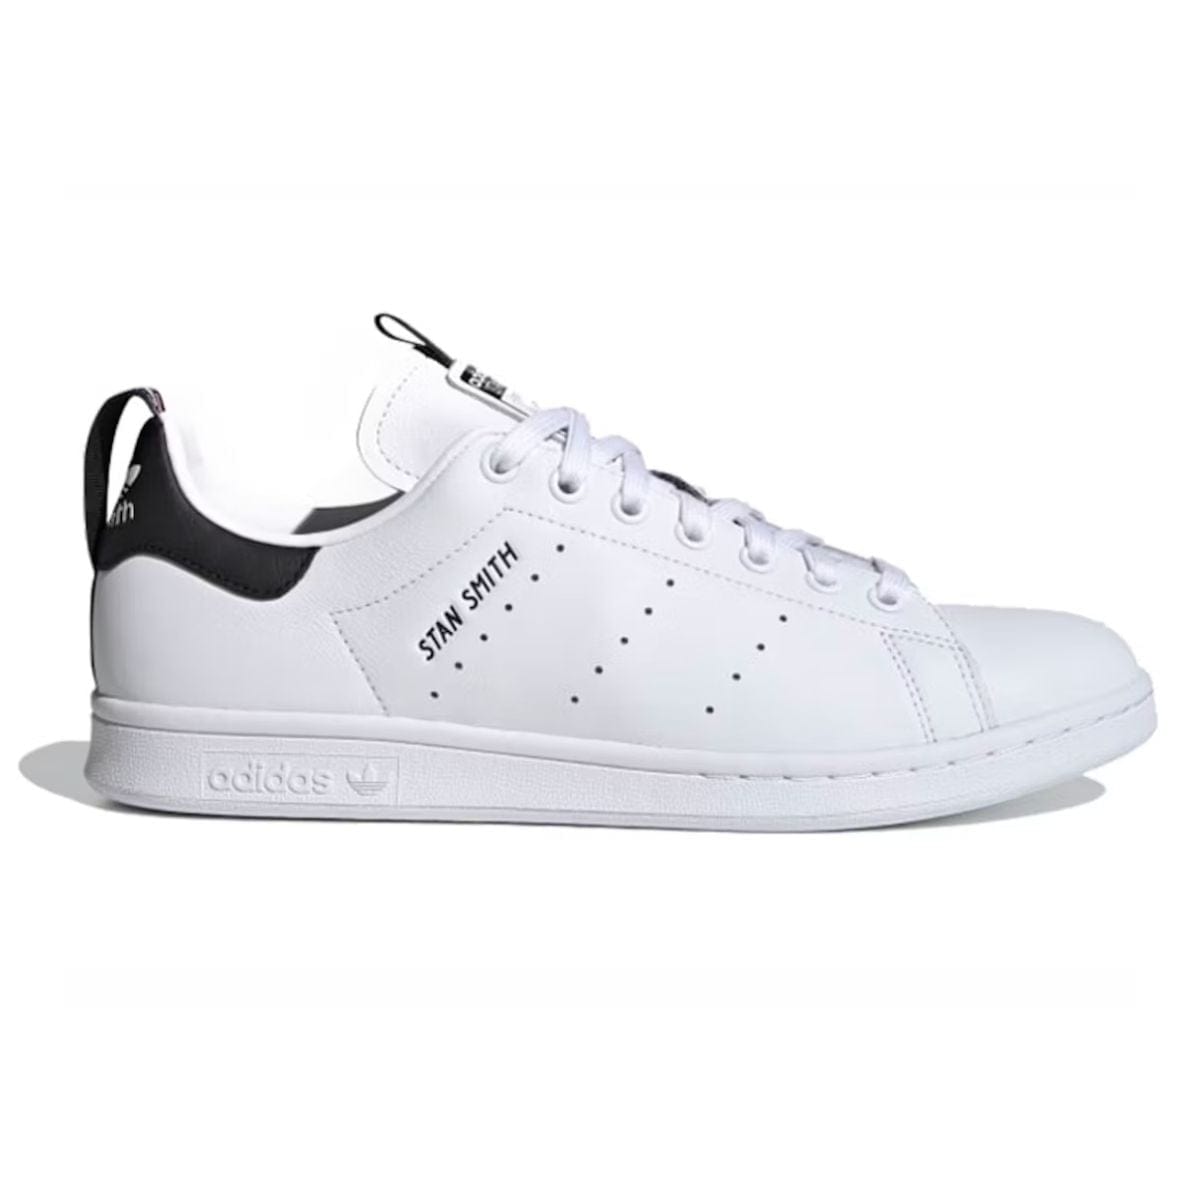 Adidas Stan Smith Replacement Shoelaces - Kicks Shoelaces